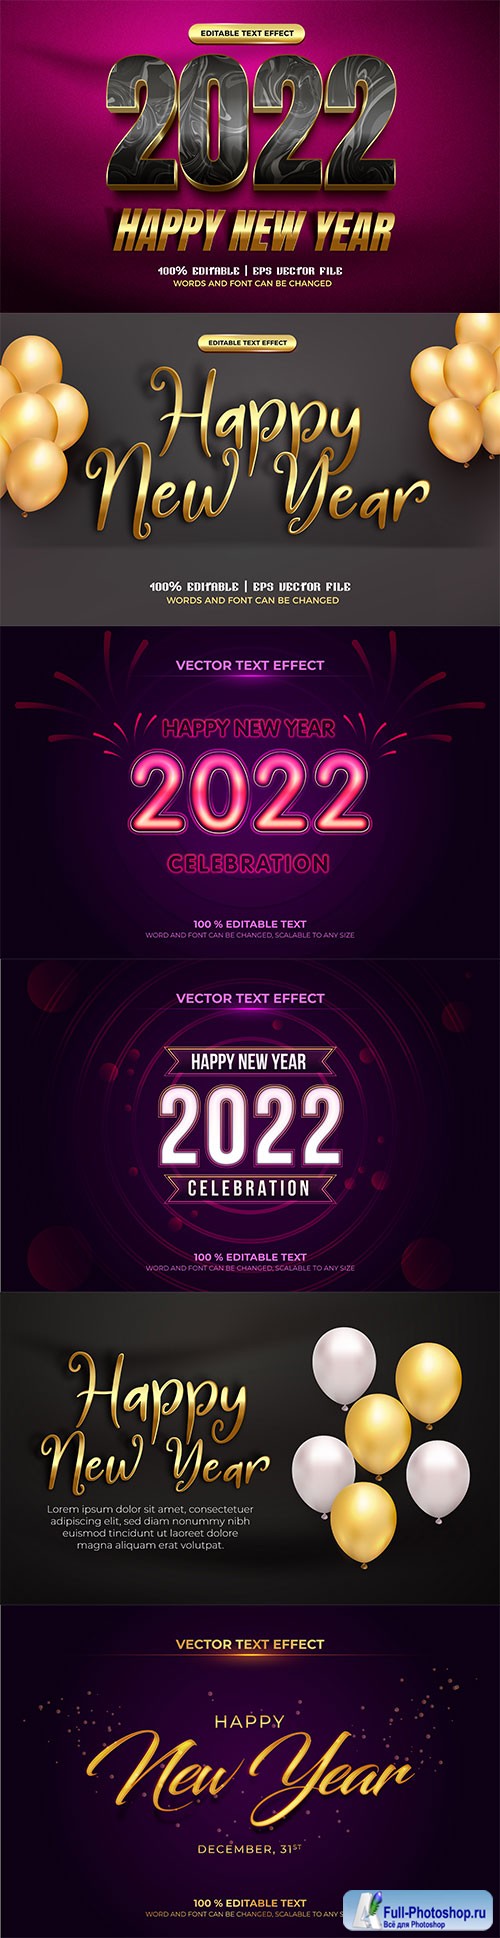 Happy new year 2022 luxury black gold 3d editable text effect premium vector